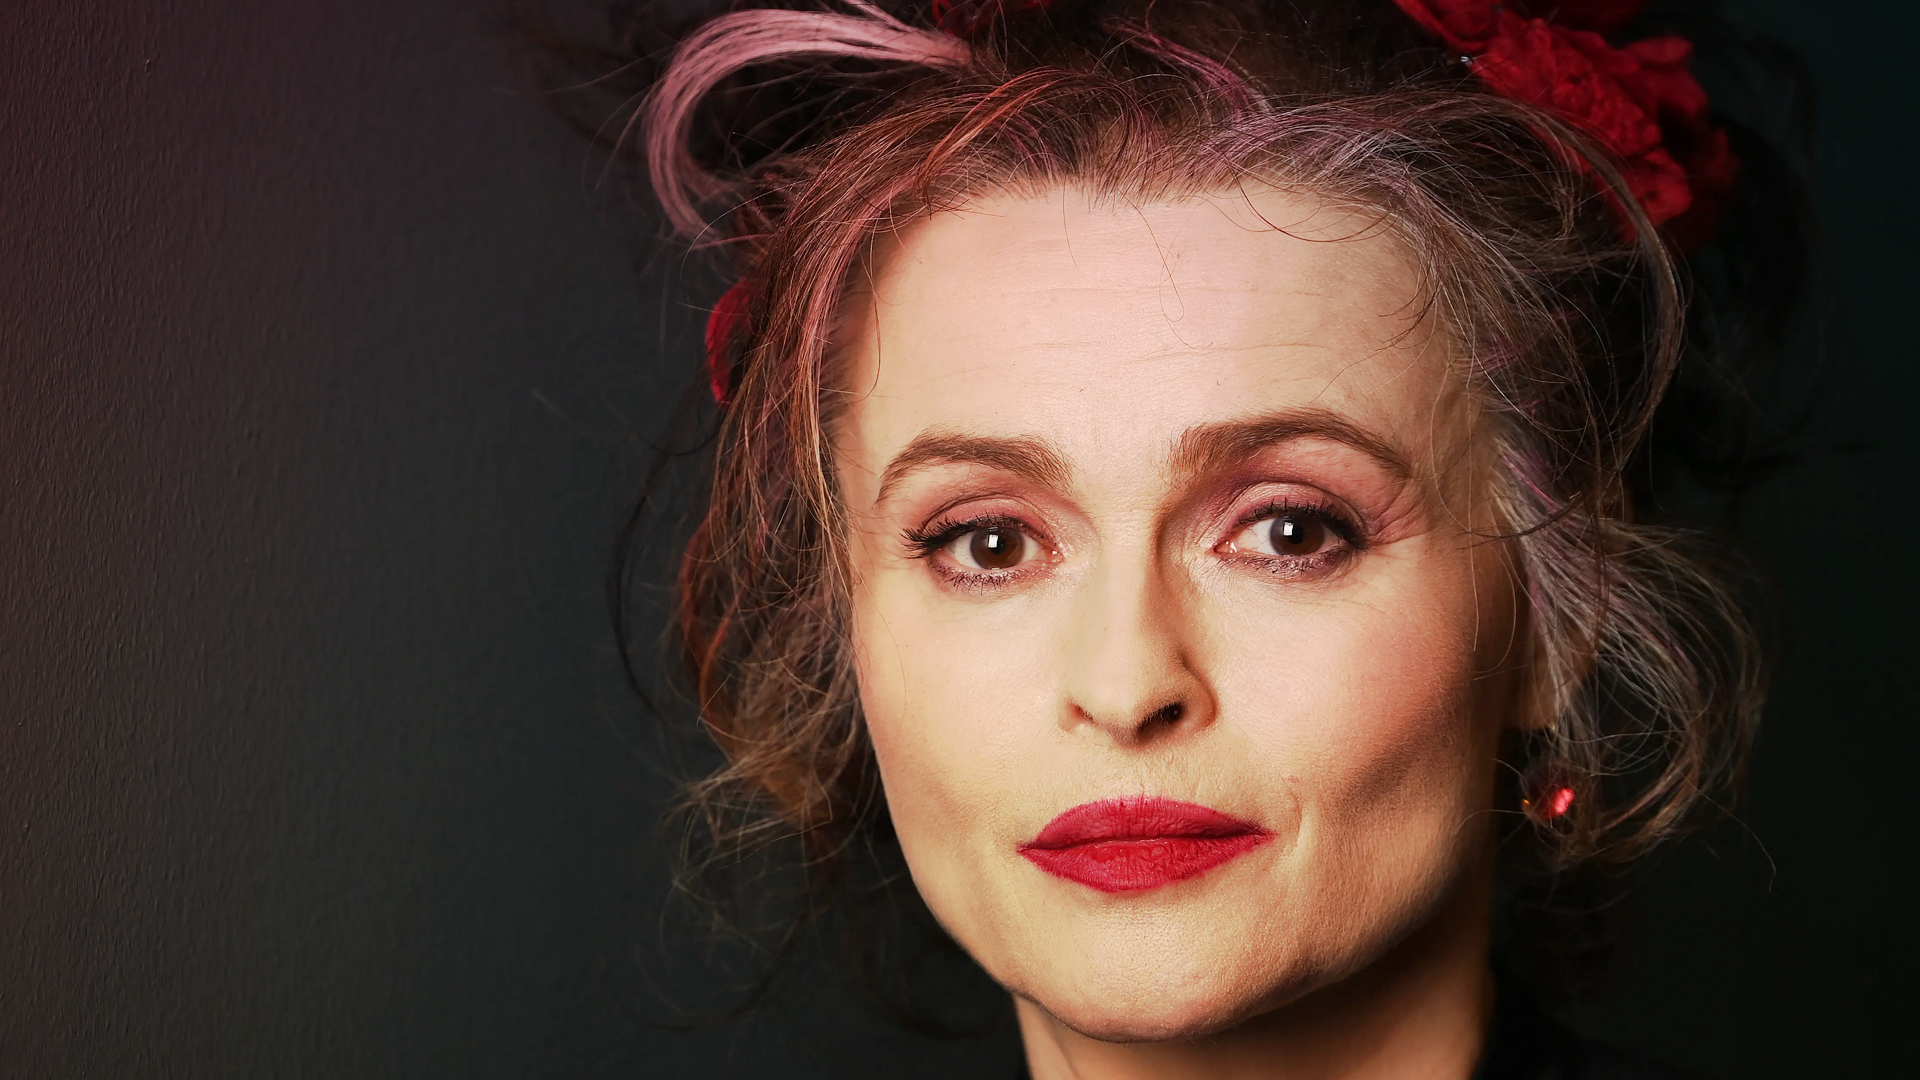 How Many Kids Does Helena Bonham Carter Have?